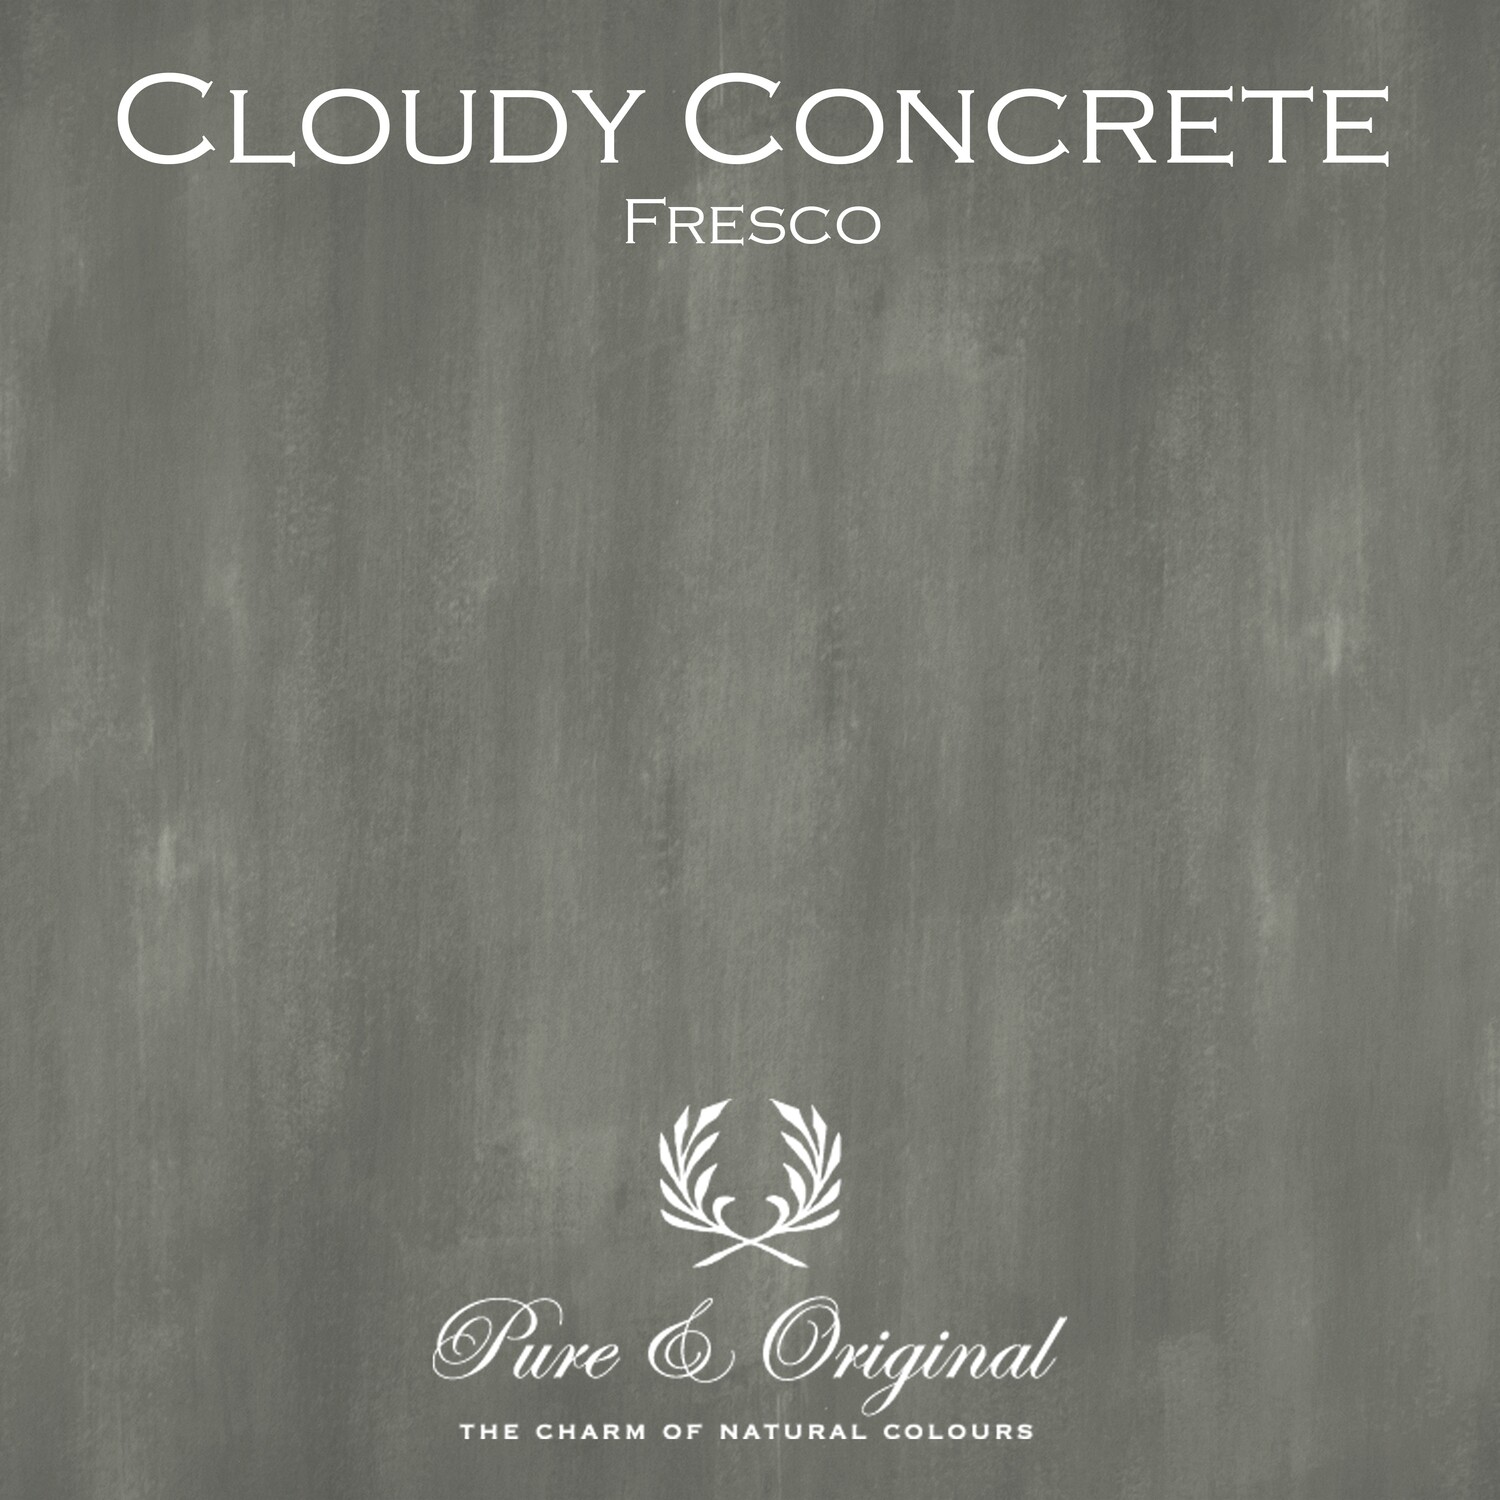 Cloudy Concrete Fresco